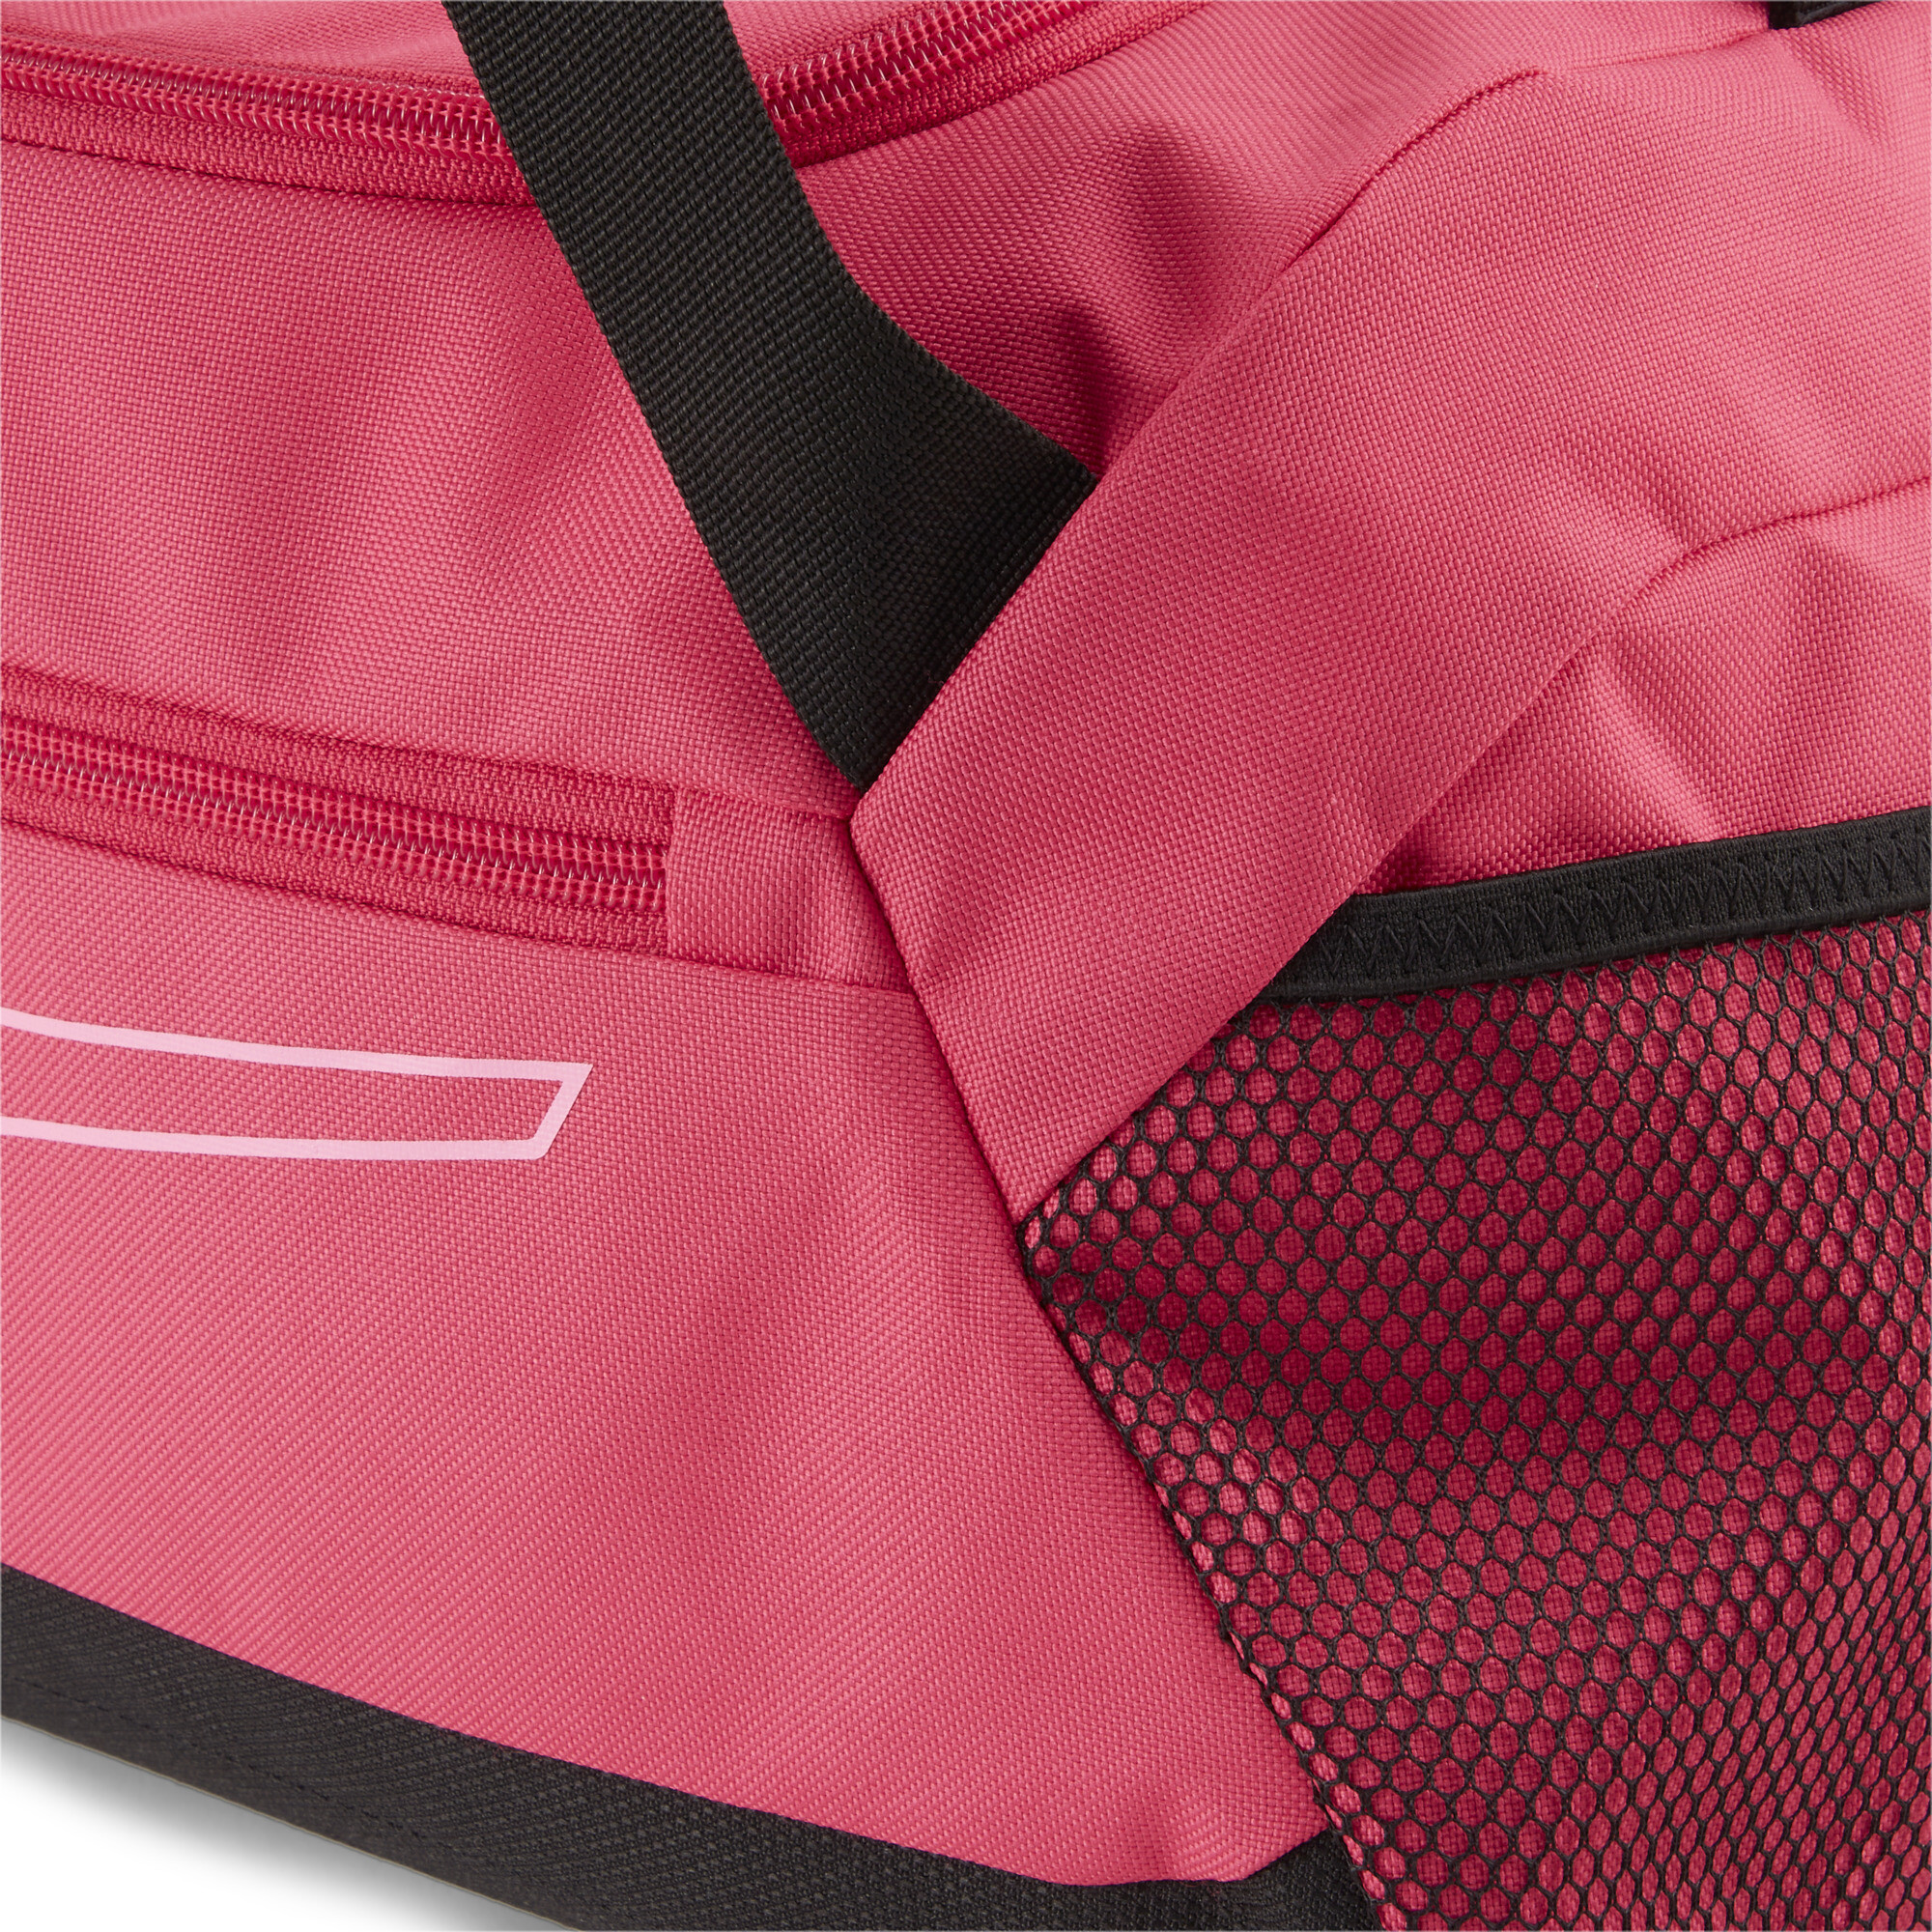 Puma Fundamentals Small Sports Bag, Pink, Accessories